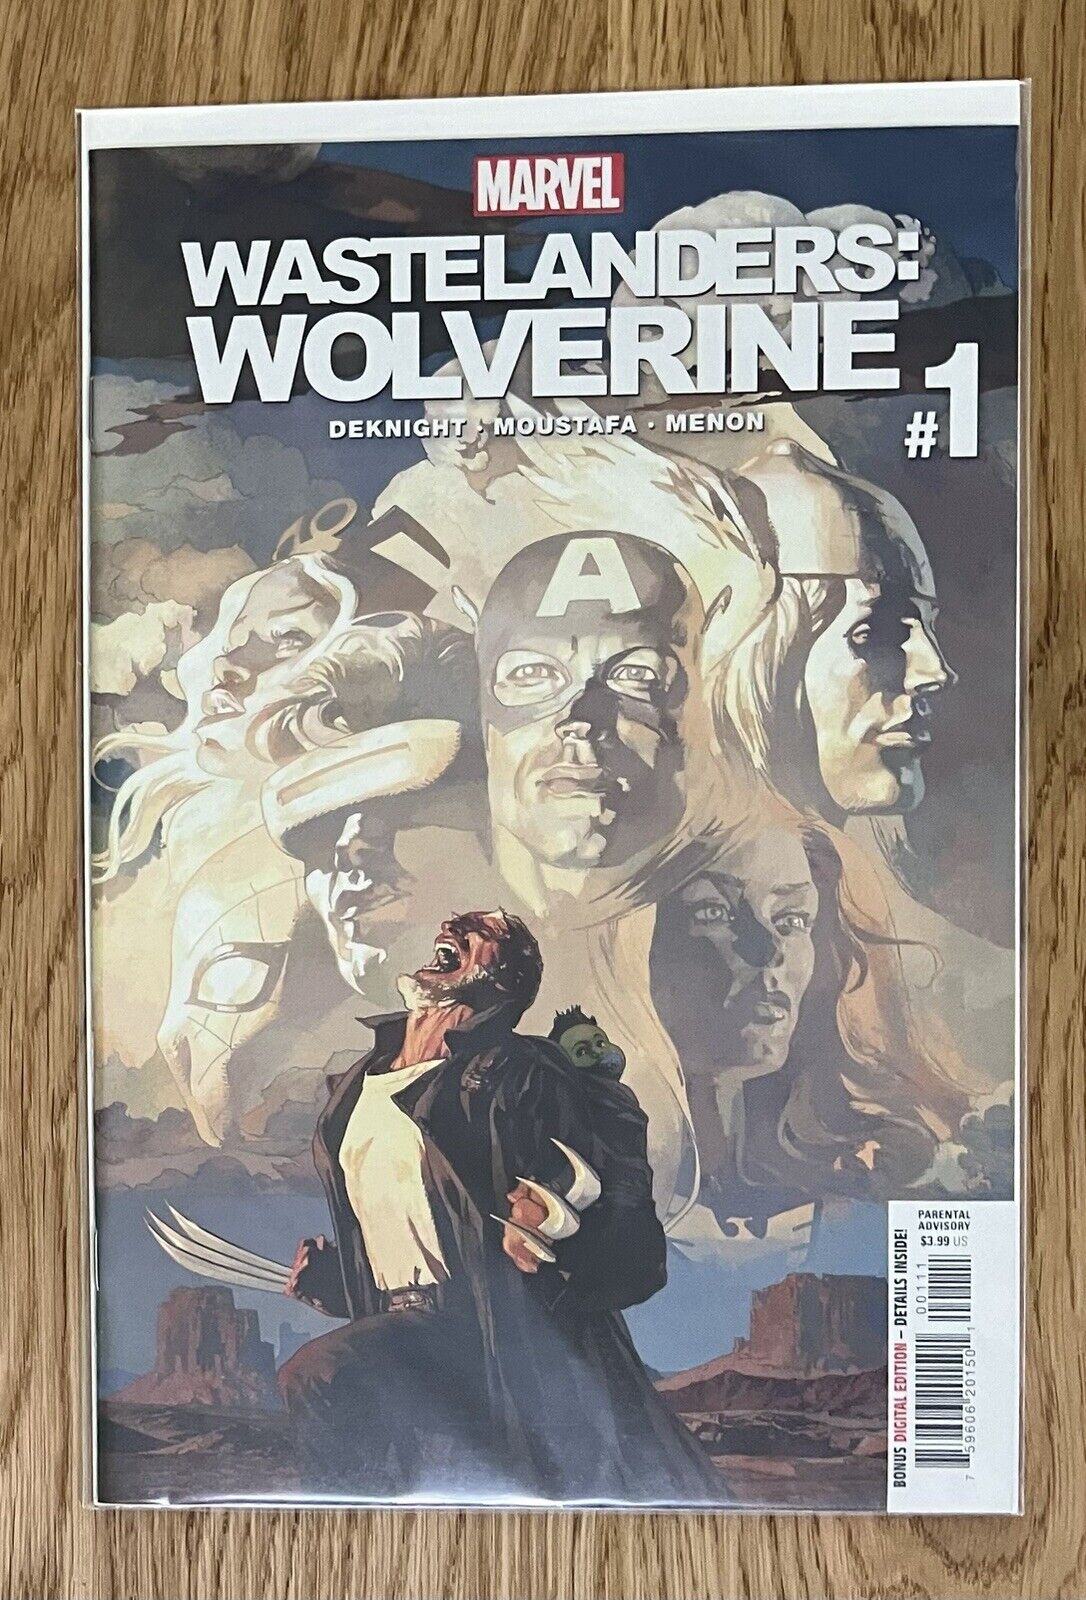 Wastelanders: Wolverine #1 (MARVEL COMICS, 2021)